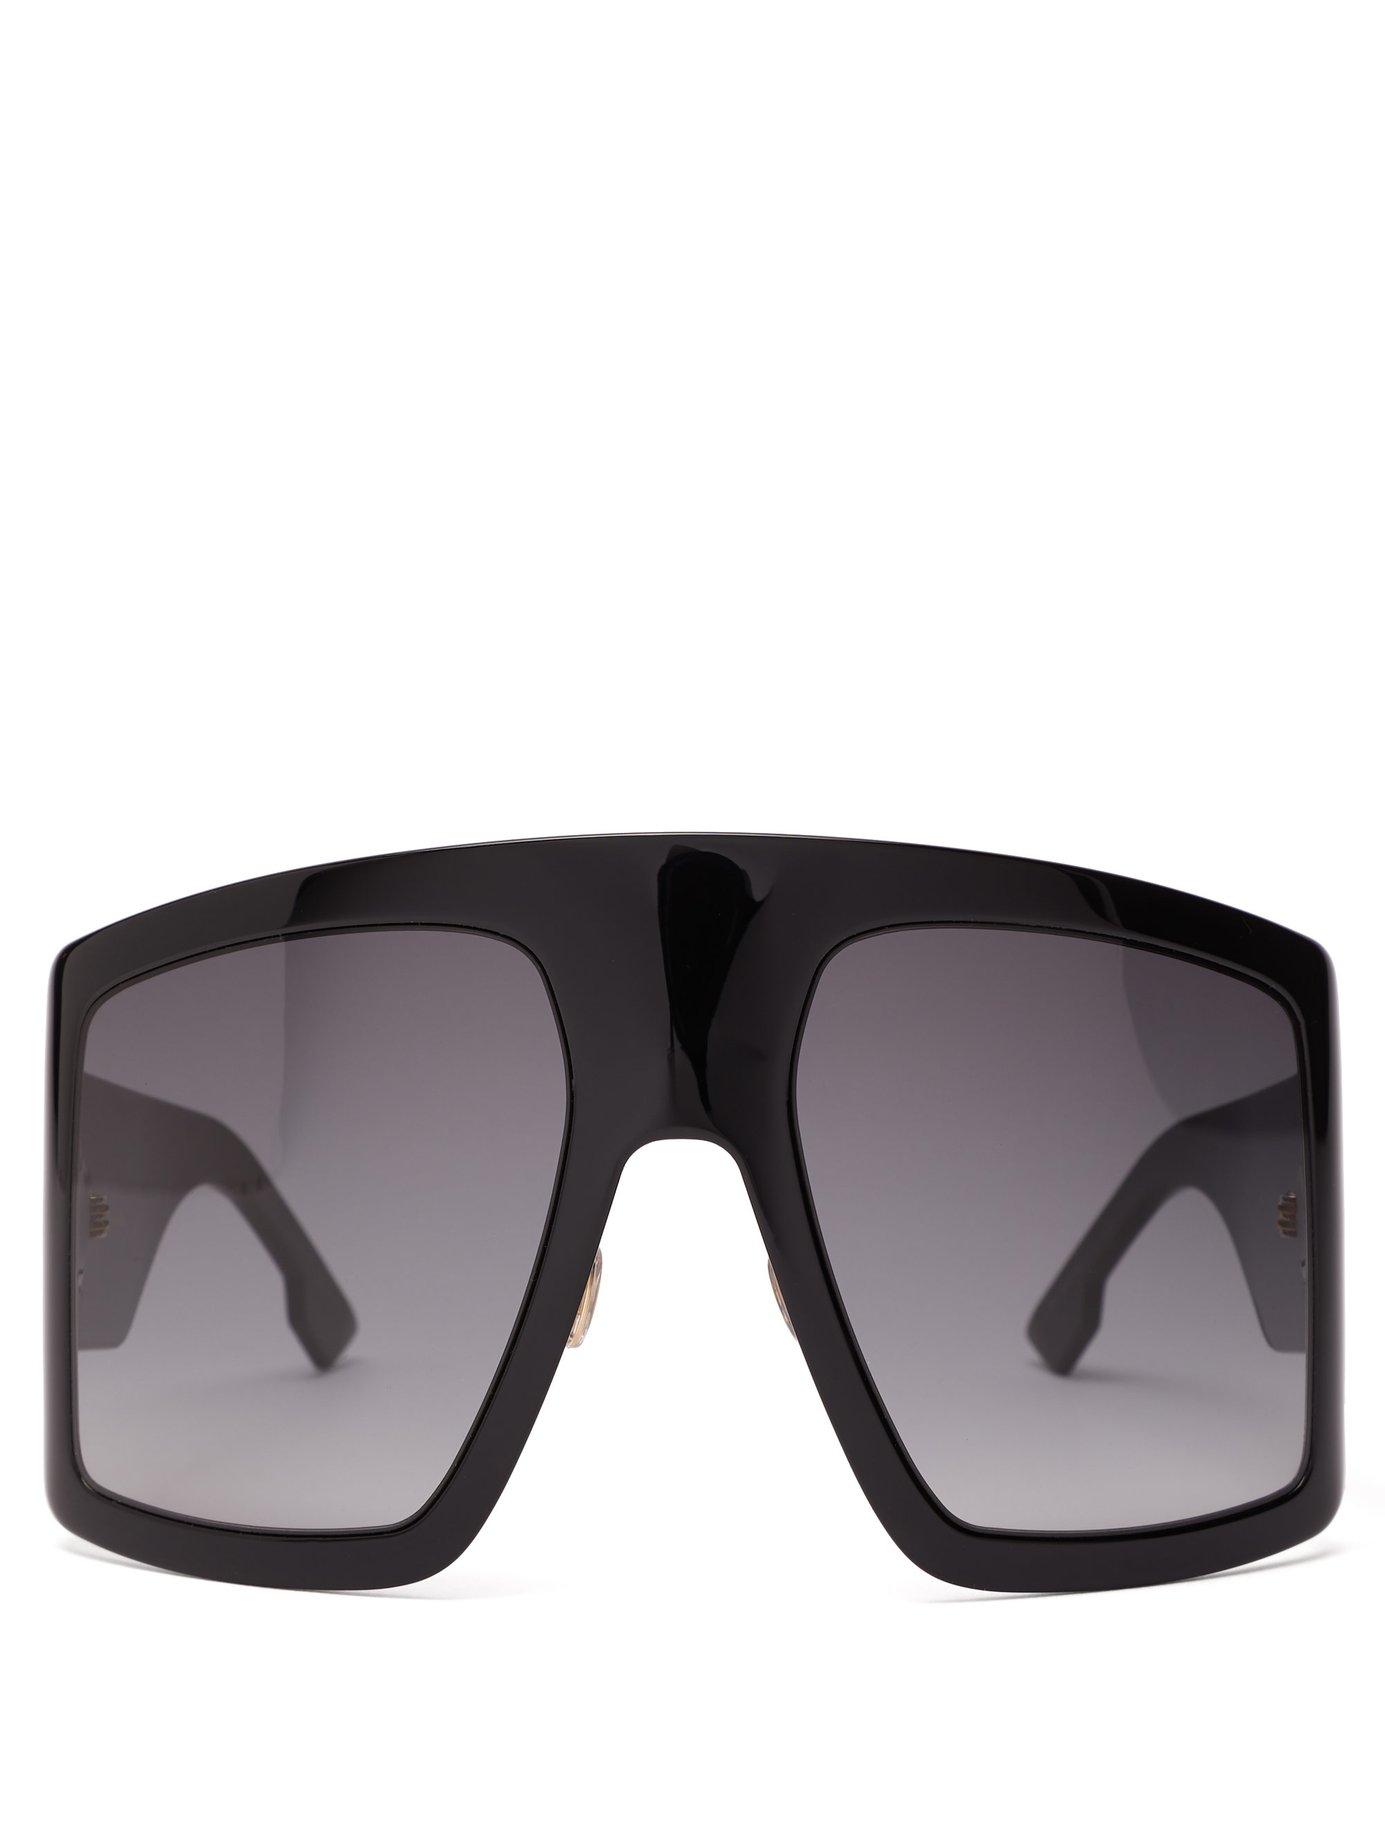 DIOR EYEWEAR DiorBlackSuit XL S1I SquareFrame Acetate Sunglasses for Men   MR PORTER